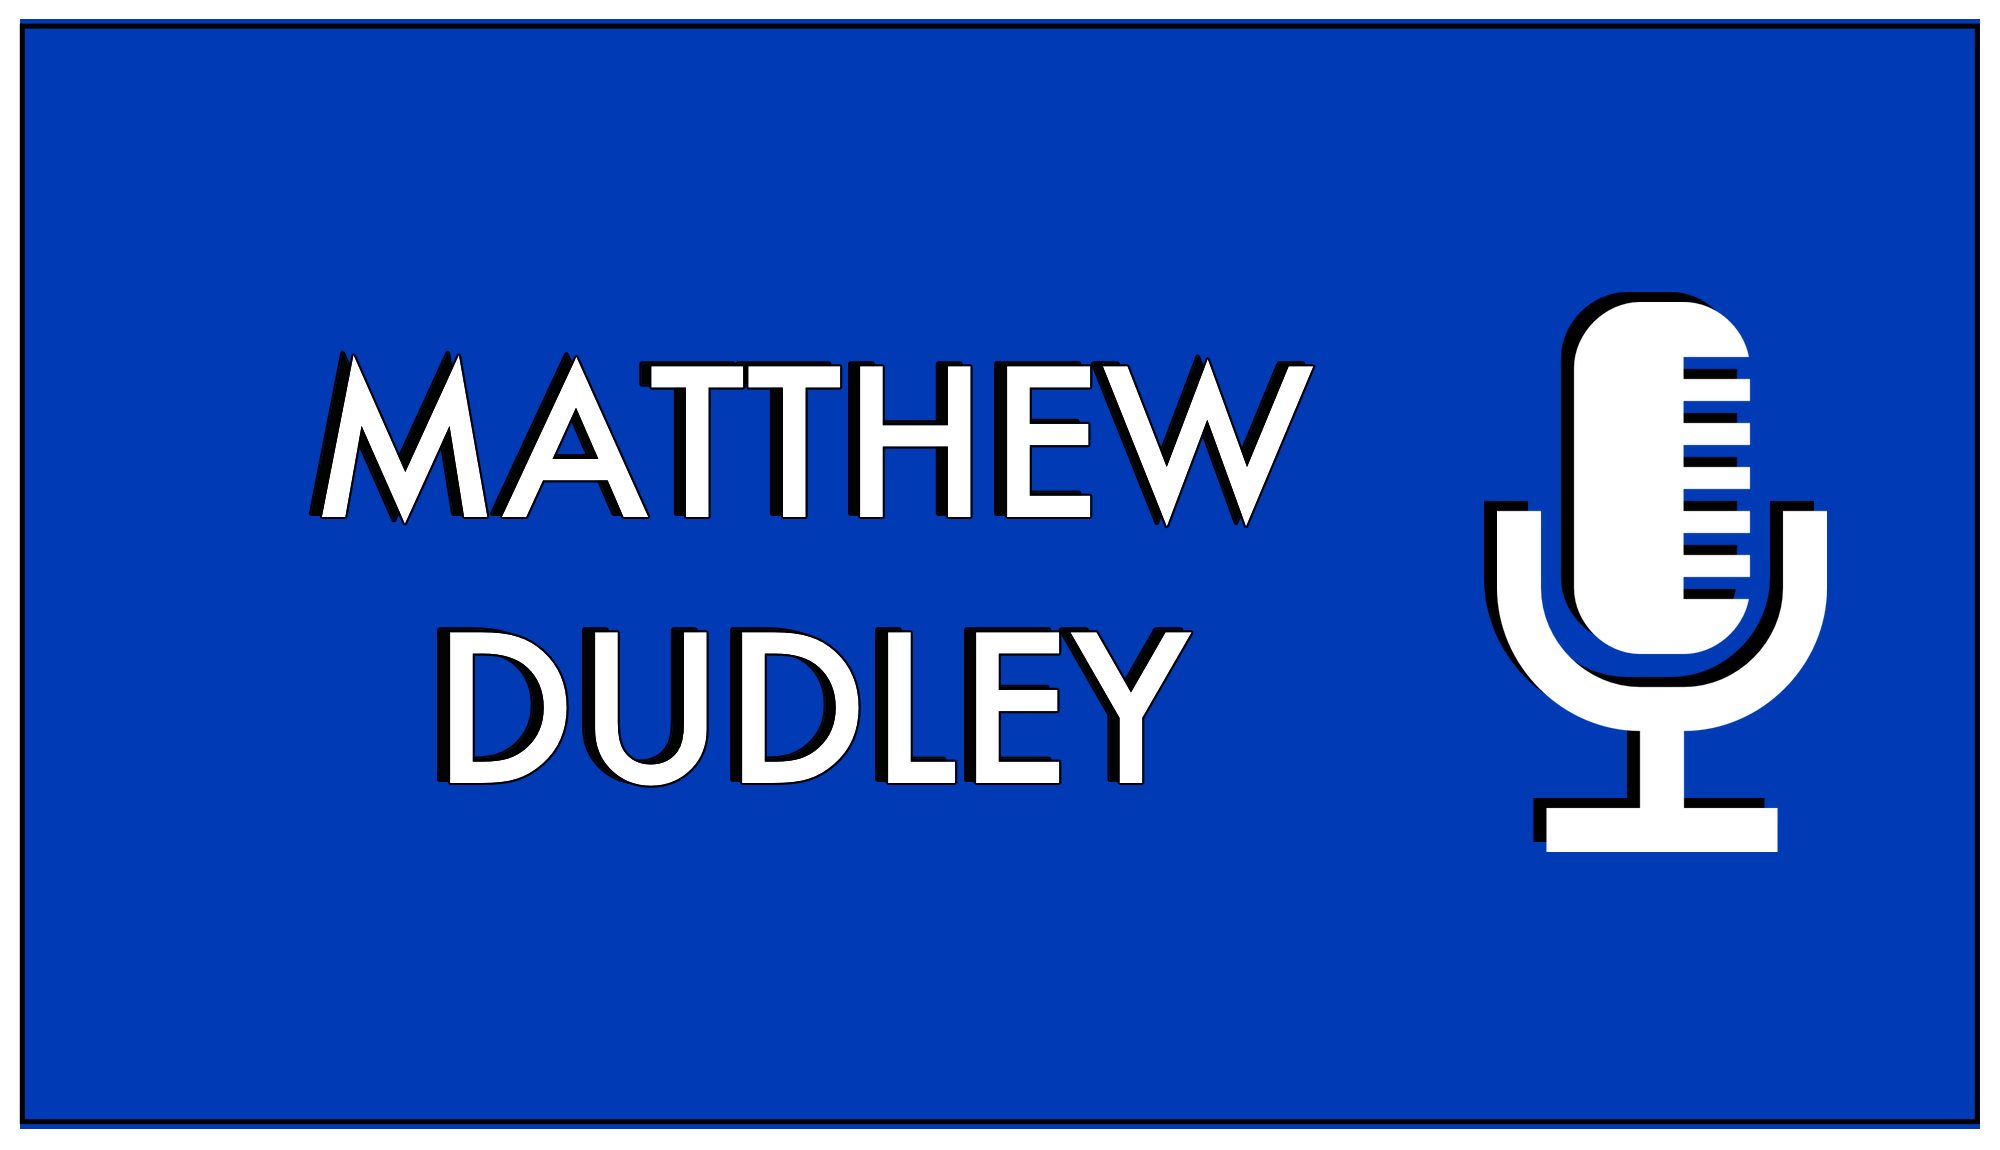 Matthew Dudley